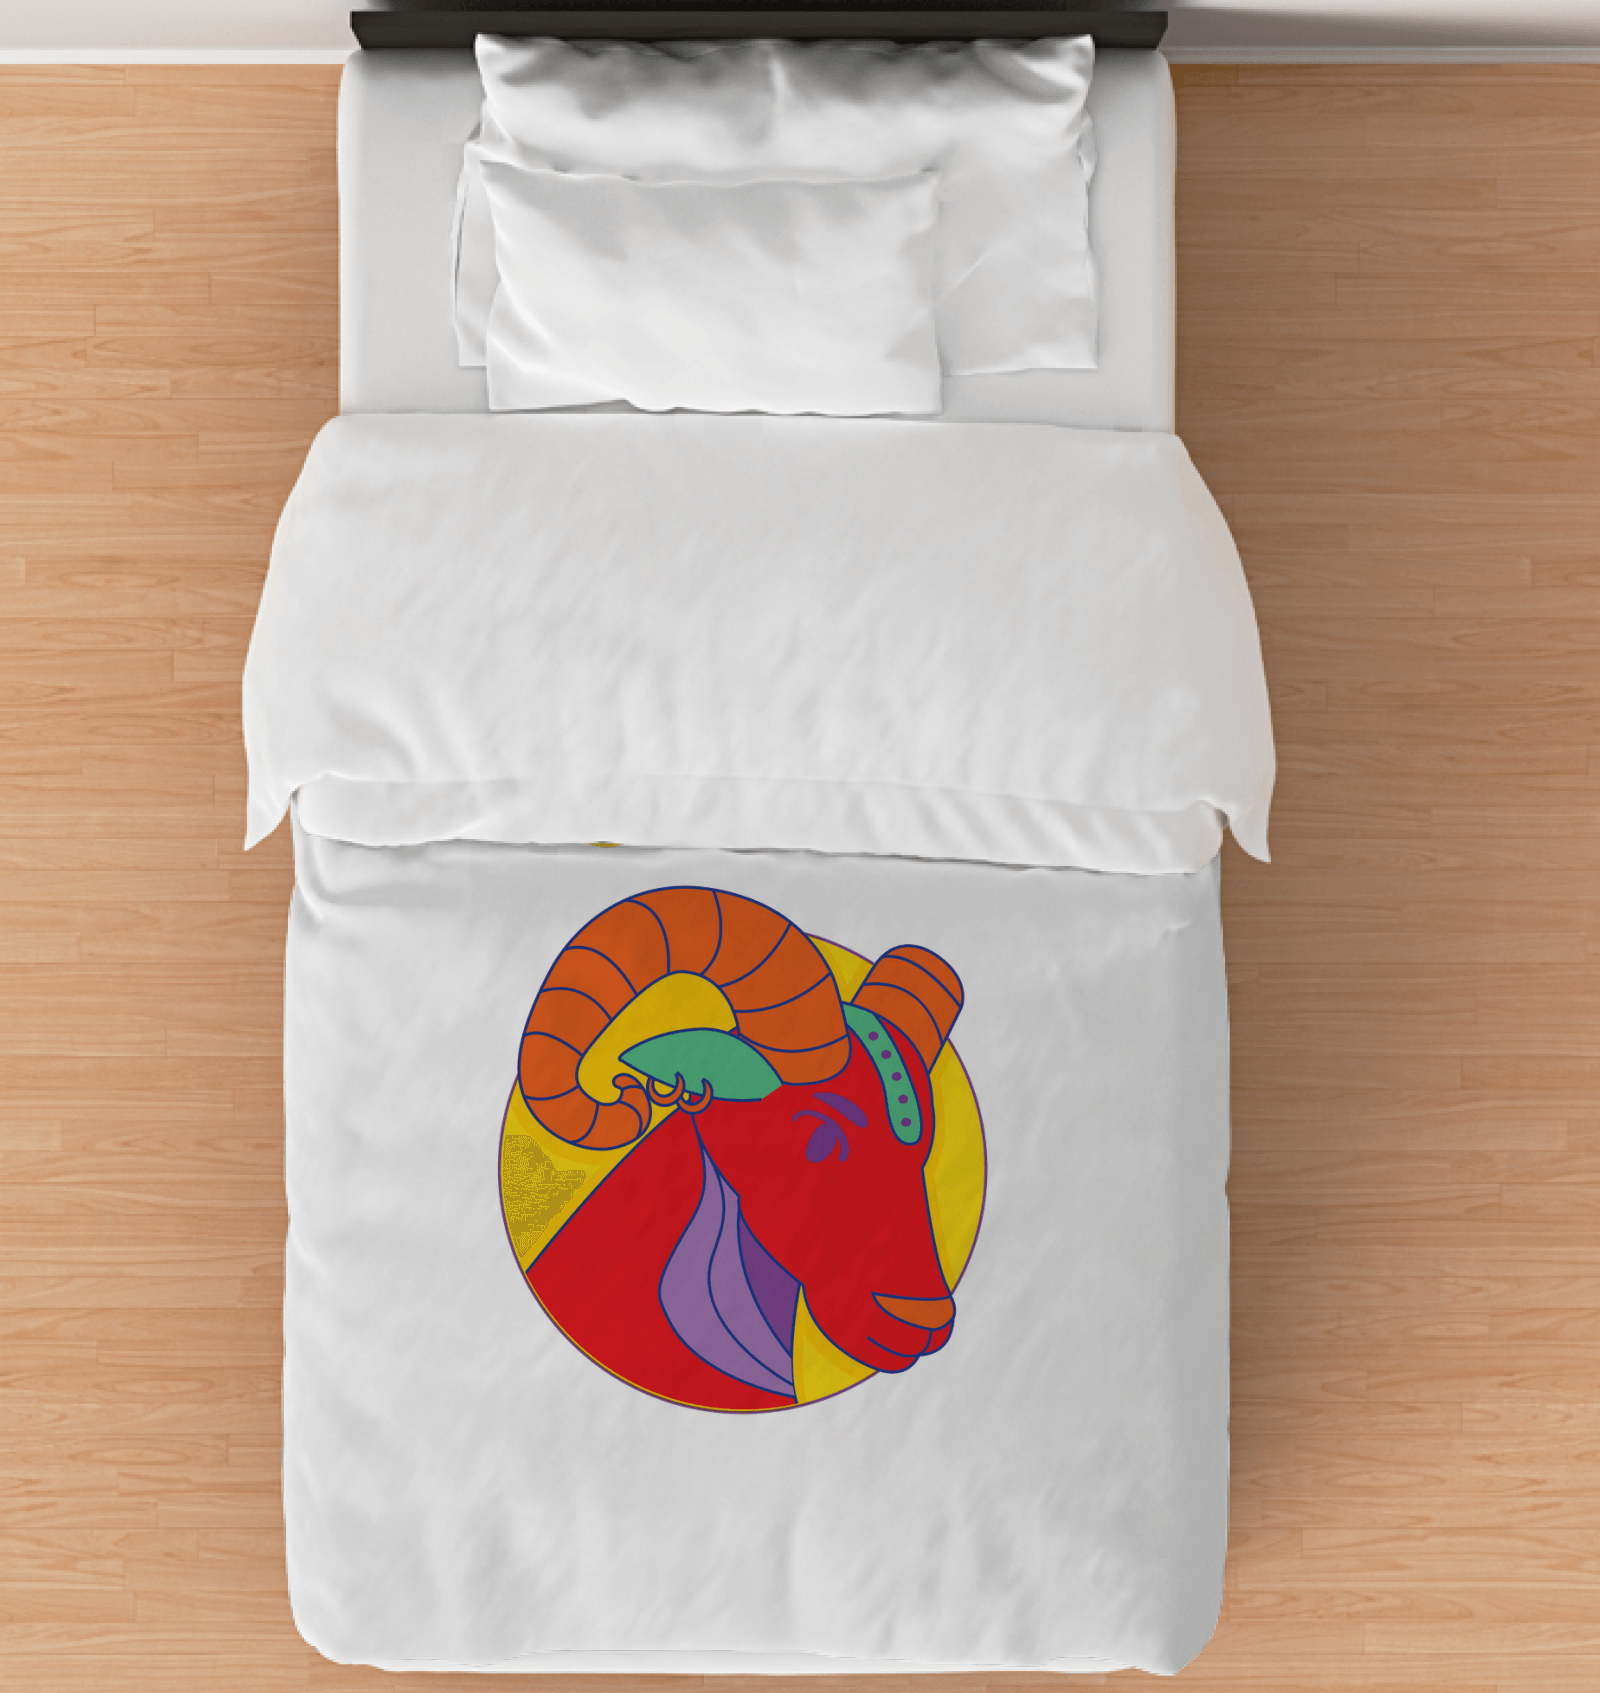 Aries Comforter Twin | Zodiac Series 5 - Beyond T-shirts